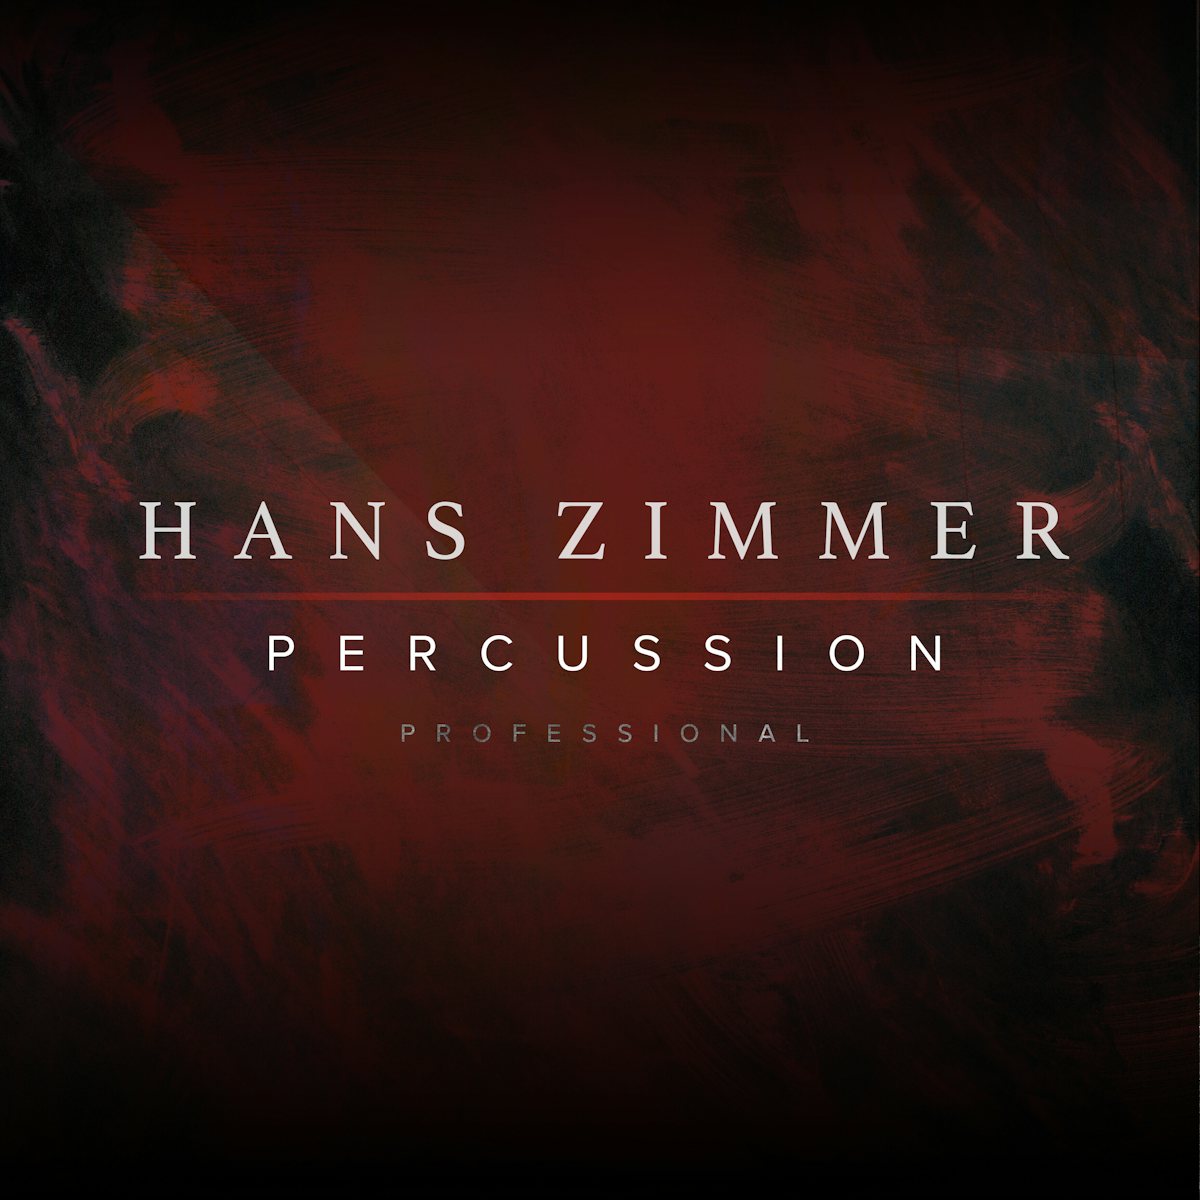 Hans Zimmer Percussion Professional artwork